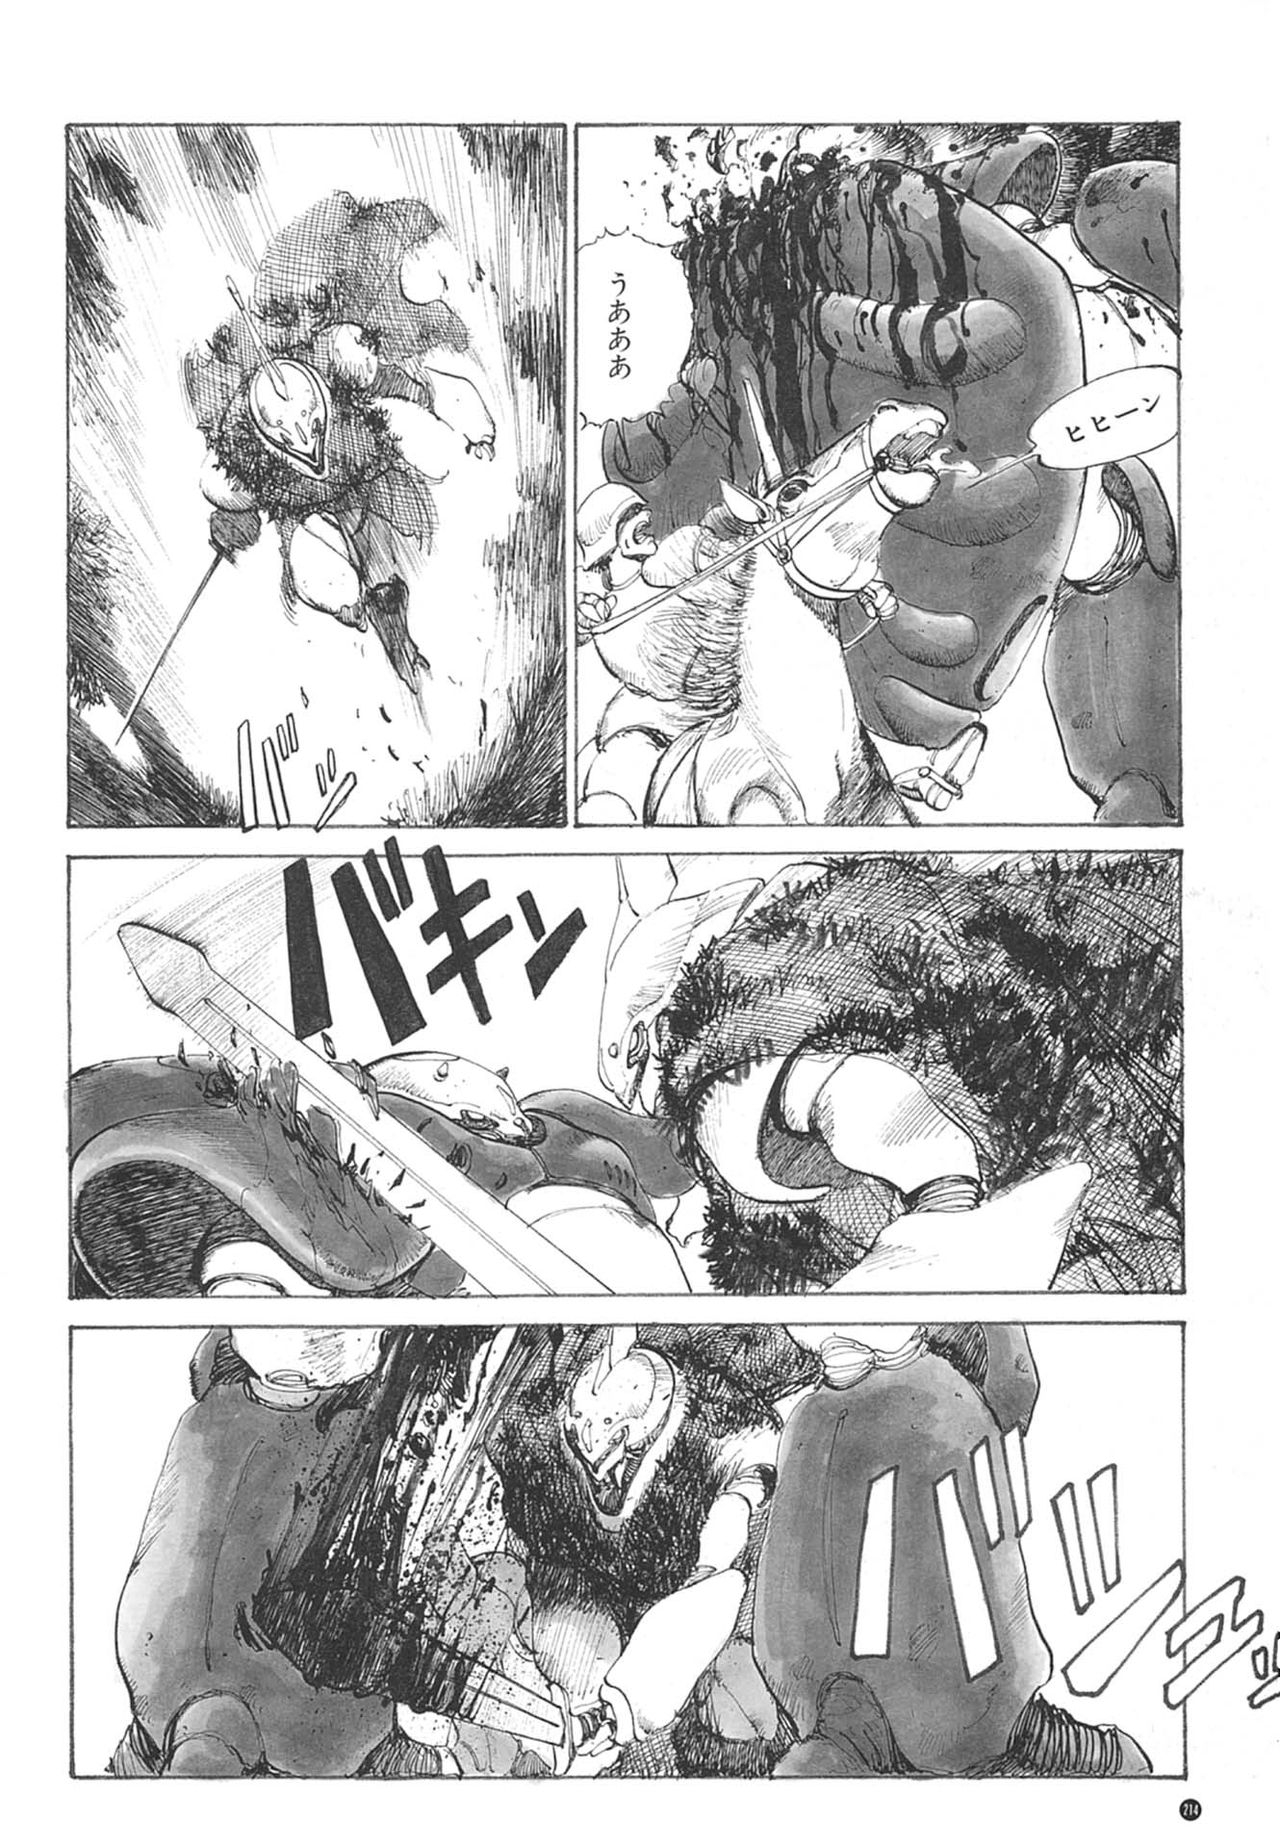 [Kazuhisa Kondo] Kazuhisa Kondo 2D & 3D Works - Go Ahead - From Mobile Suit Gundam to Original Mechanism 213